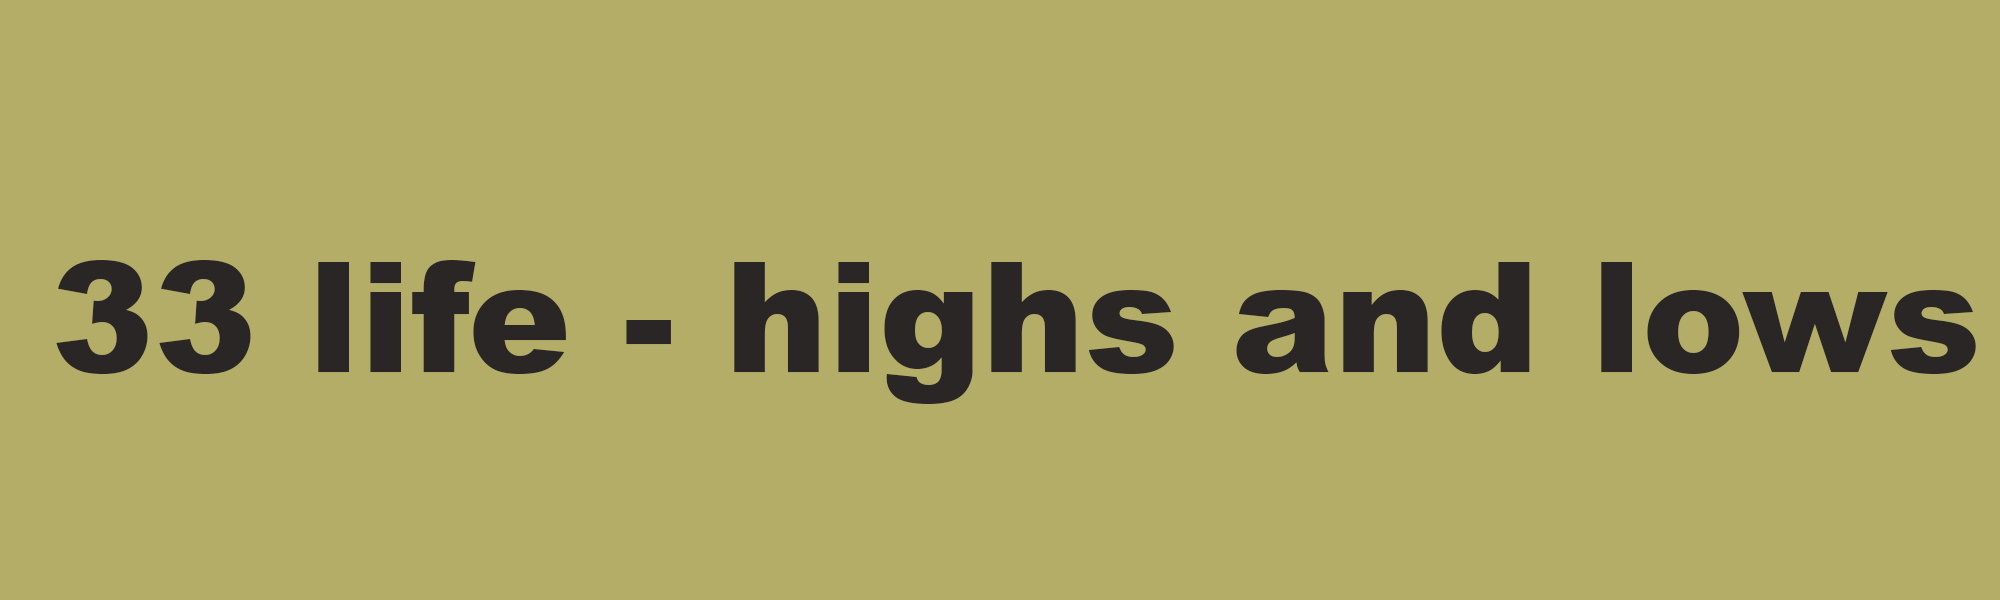 33-life-highs